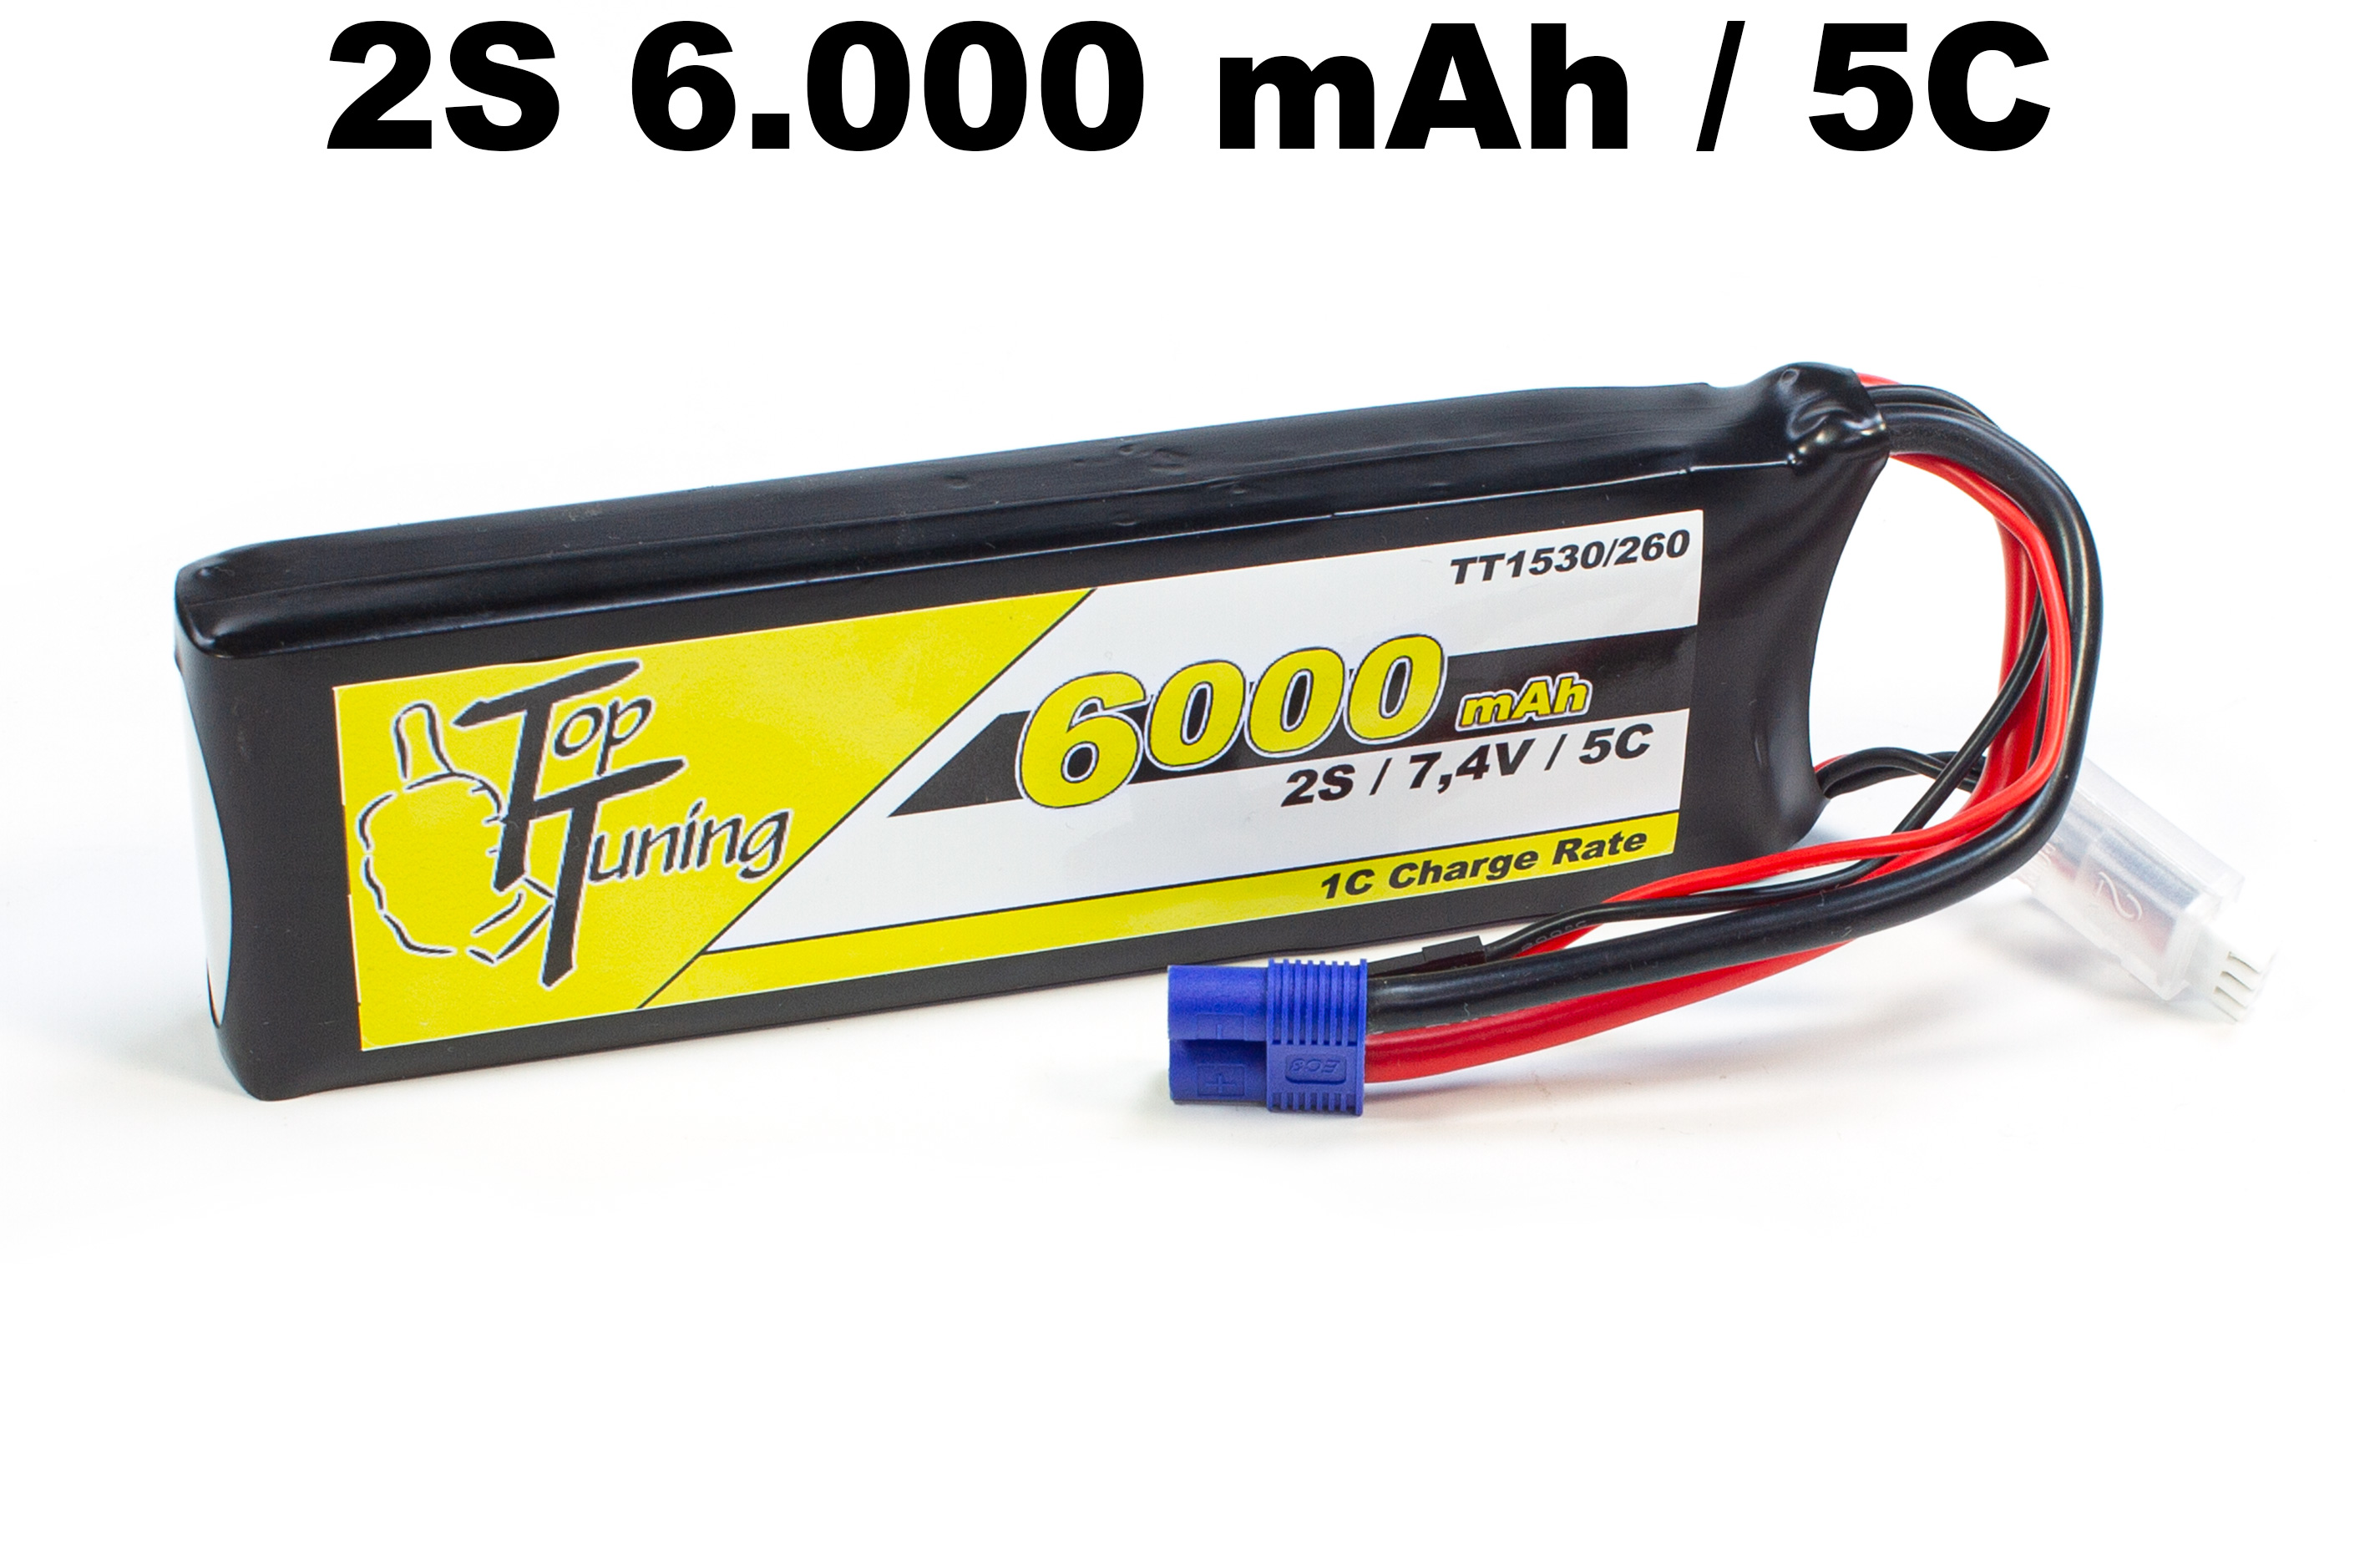 TT1530/260 Top Tuning 6000 mAh LiPo receiver battery 2S, 7,4V 5C